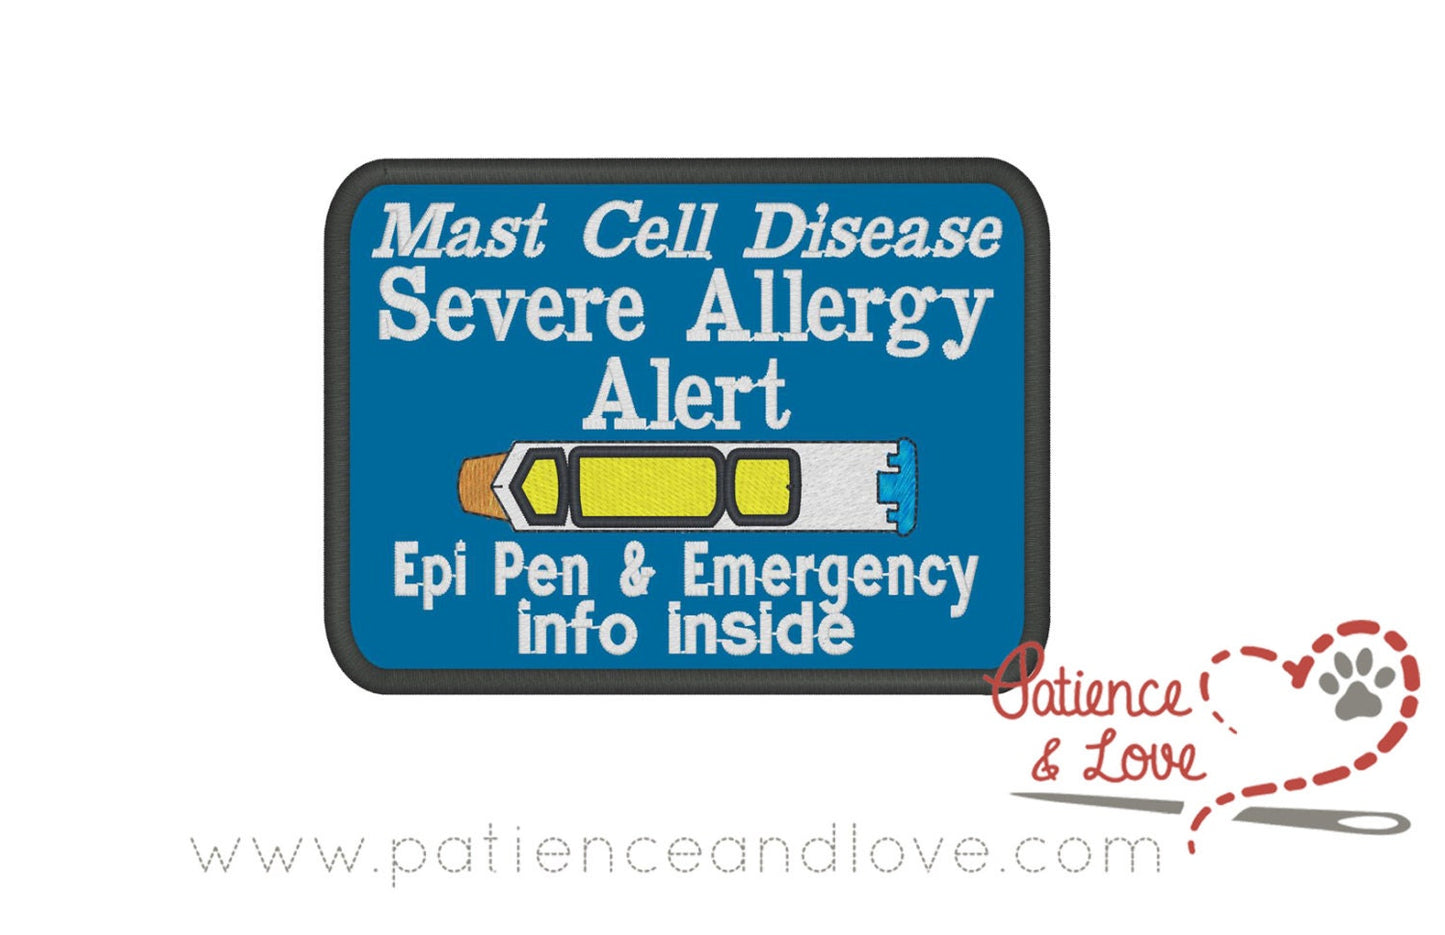 Mast Cell Disease Severe Allergy Alert, Epi Pen and Emergency info inside, allergy alert, medical alert 4 x 3 inch rectangular patch